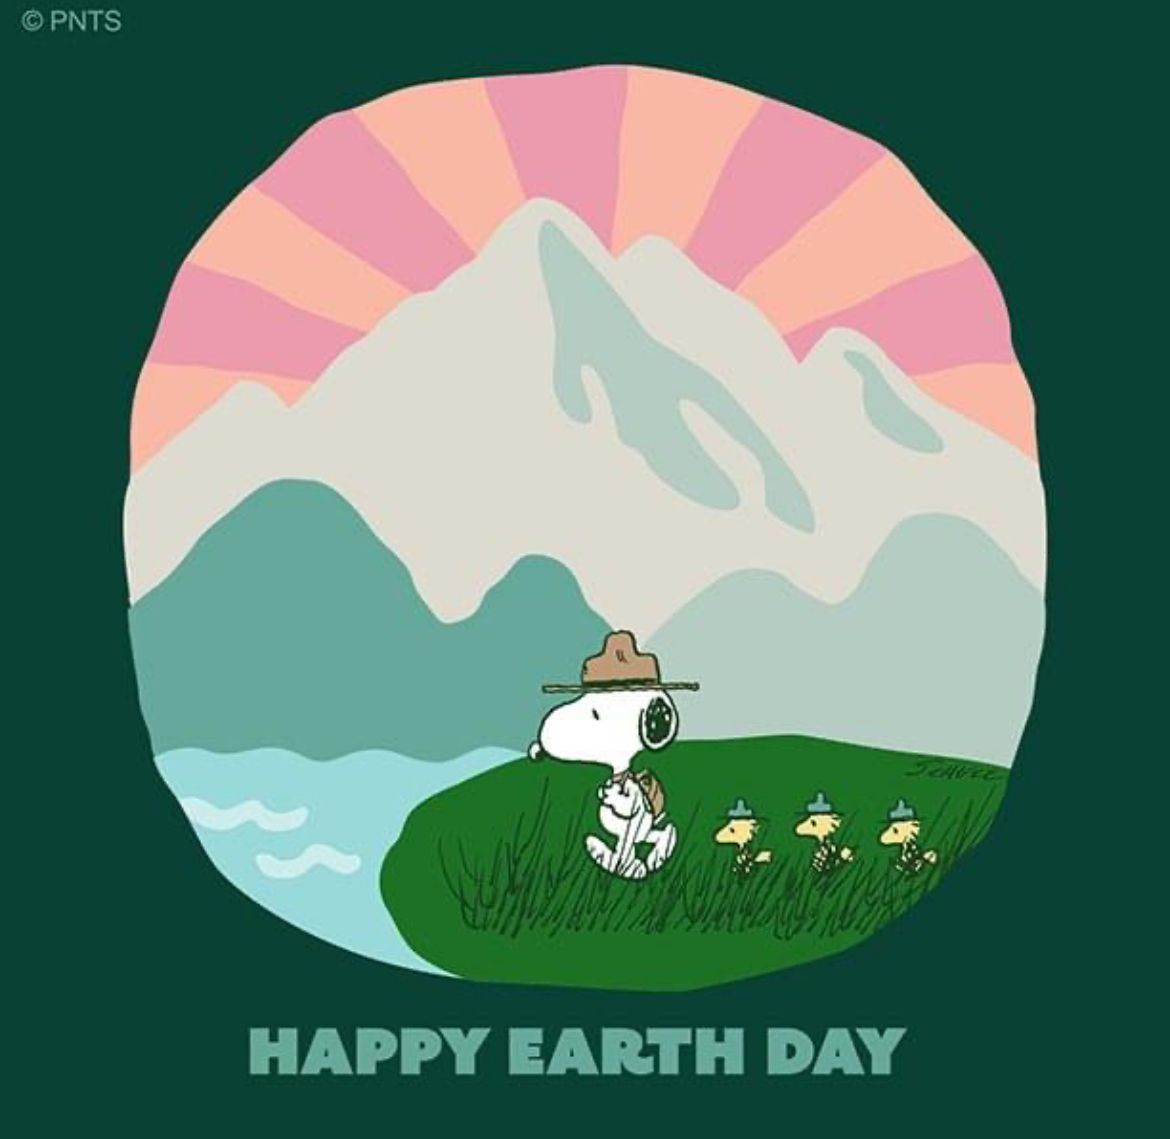 Happy Earth Day! #TakeCareOfTheEarth #Peanuts